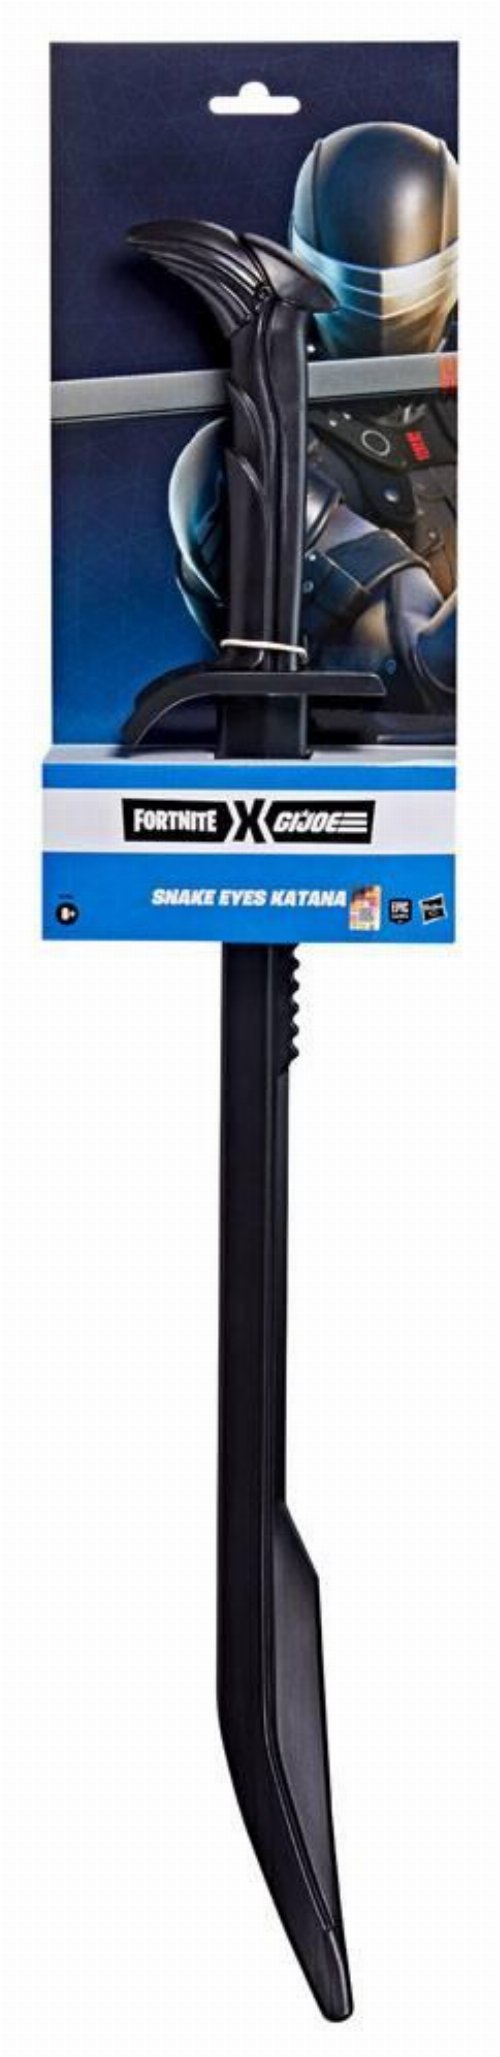 Fortnite x G.I. Joe Victory Royale Series Role Play -
Snake Eyes κλίμακας 1/1 Ρέπλικα (81cm)